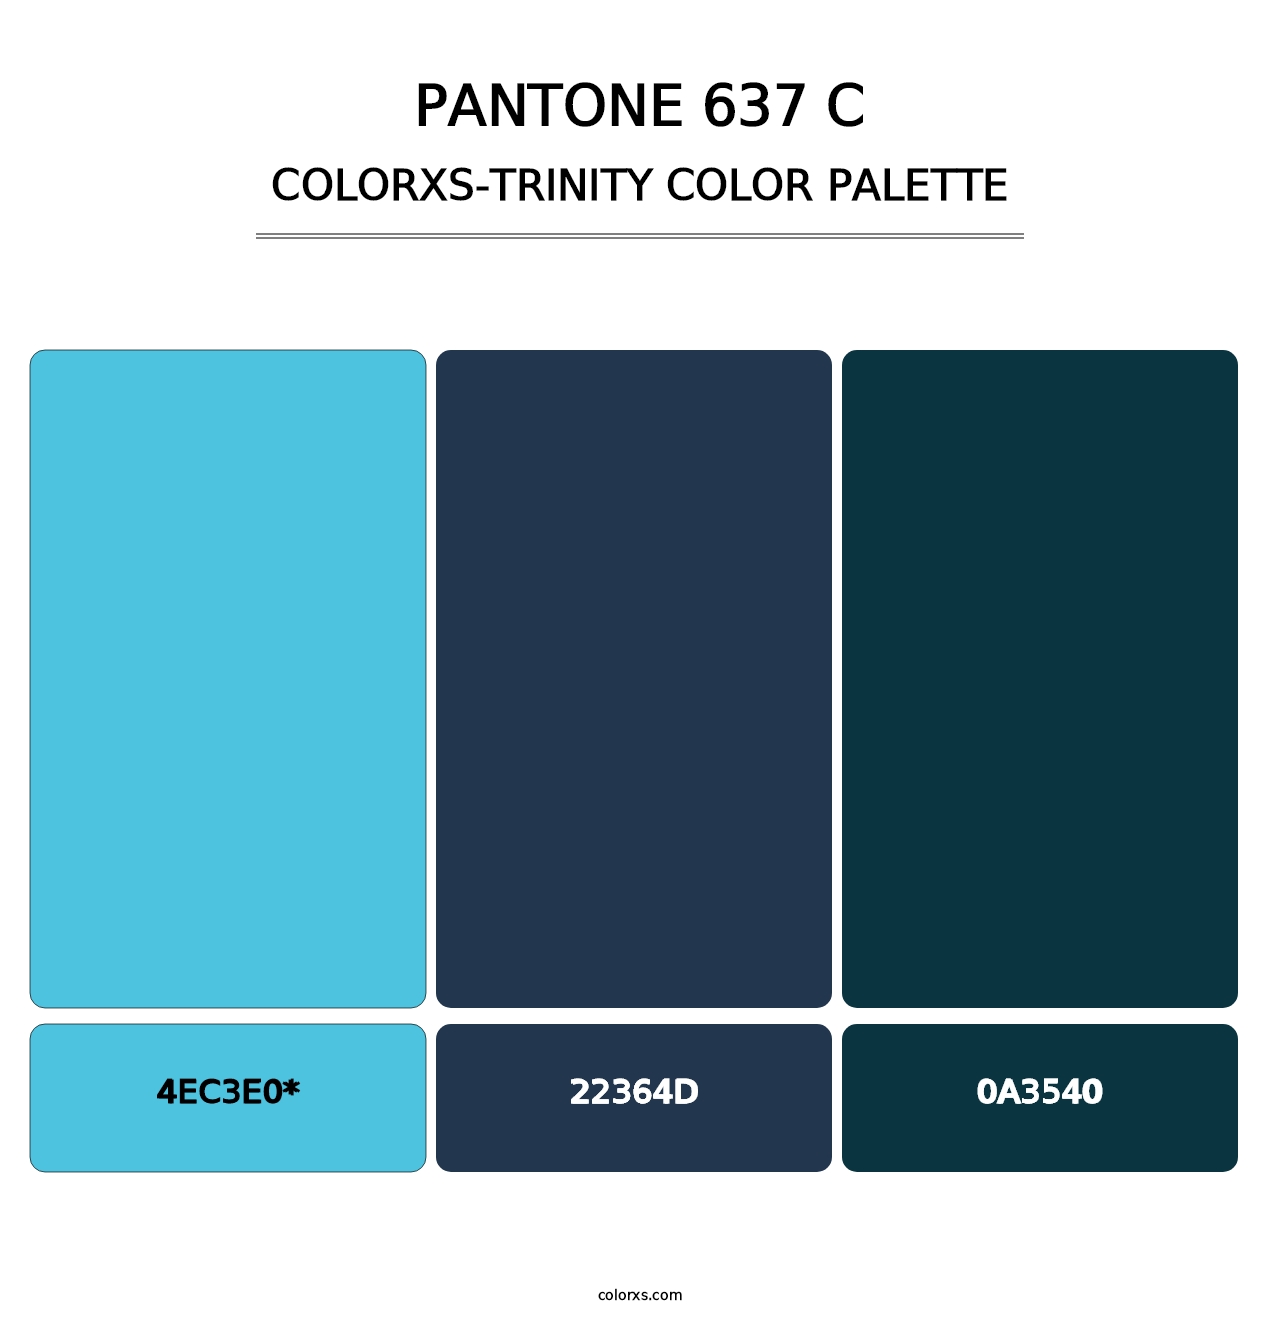 PANTONE 637 C - Colorxs Trinity Palette